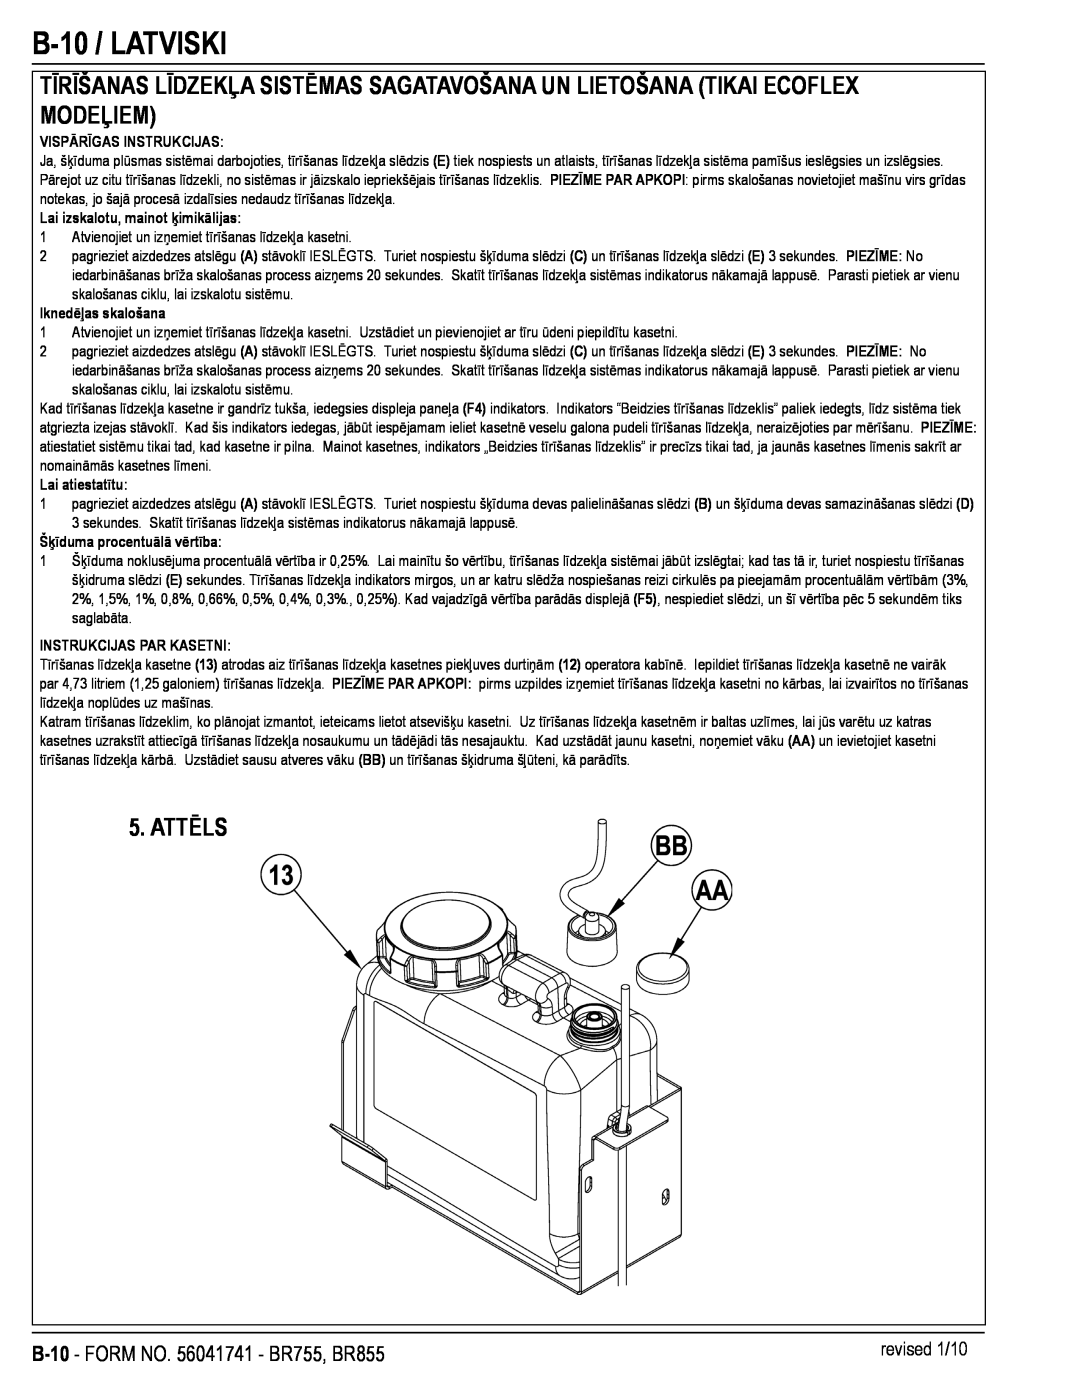 Nilfisk-Advance America manual B-10 / LATVISKI, Attēls, B-10 - FORM NO. 56041741 - BR755, BR855, Vispārīgas Instrukcijas 